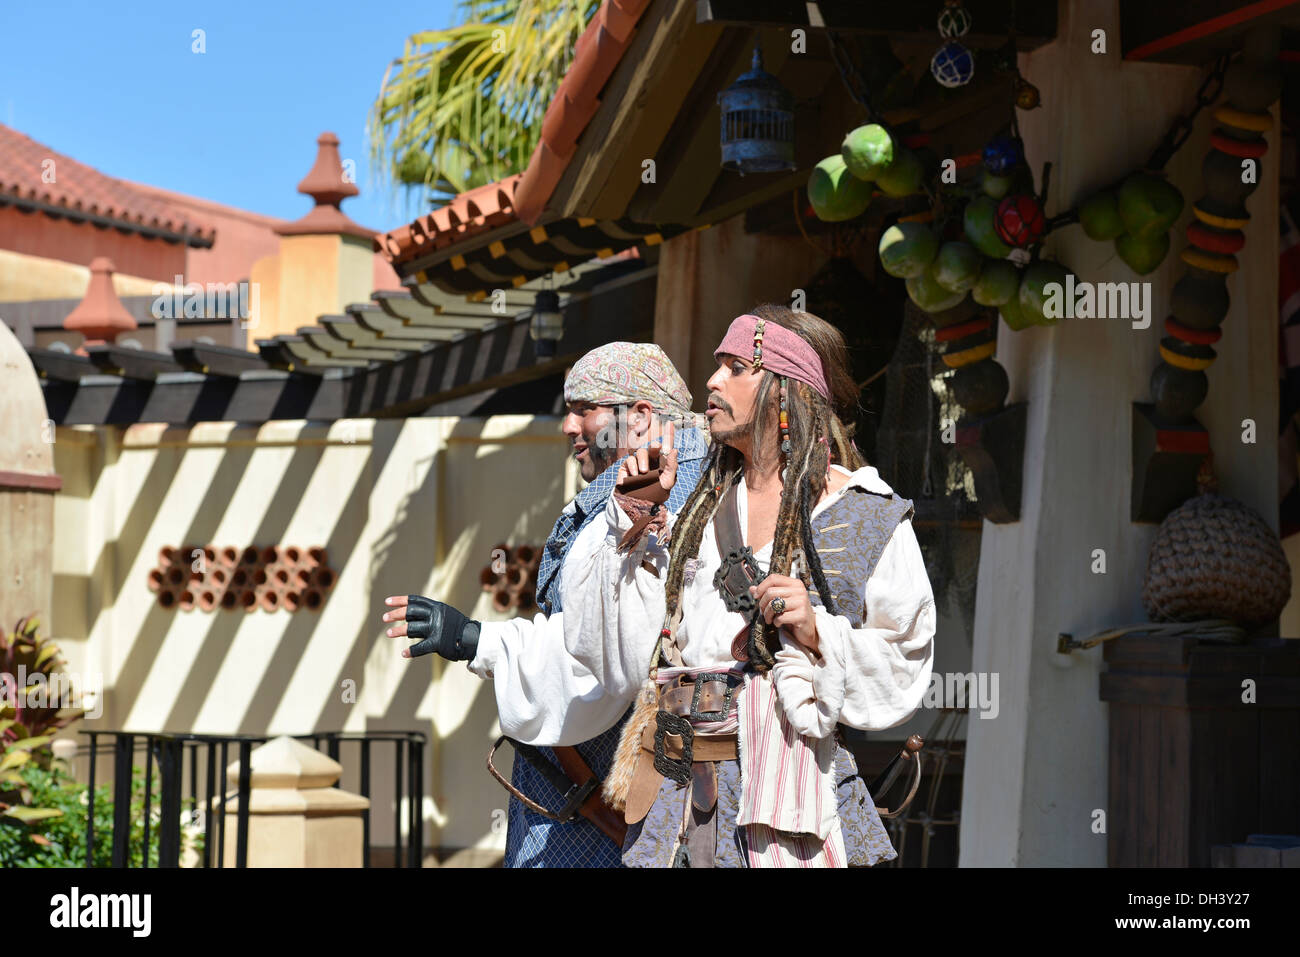 Captain Jack Sparrow's Pirate Tutorial show at Adventureland in the Magic Kingdom, Disney World Resort, Florida Stock Photo